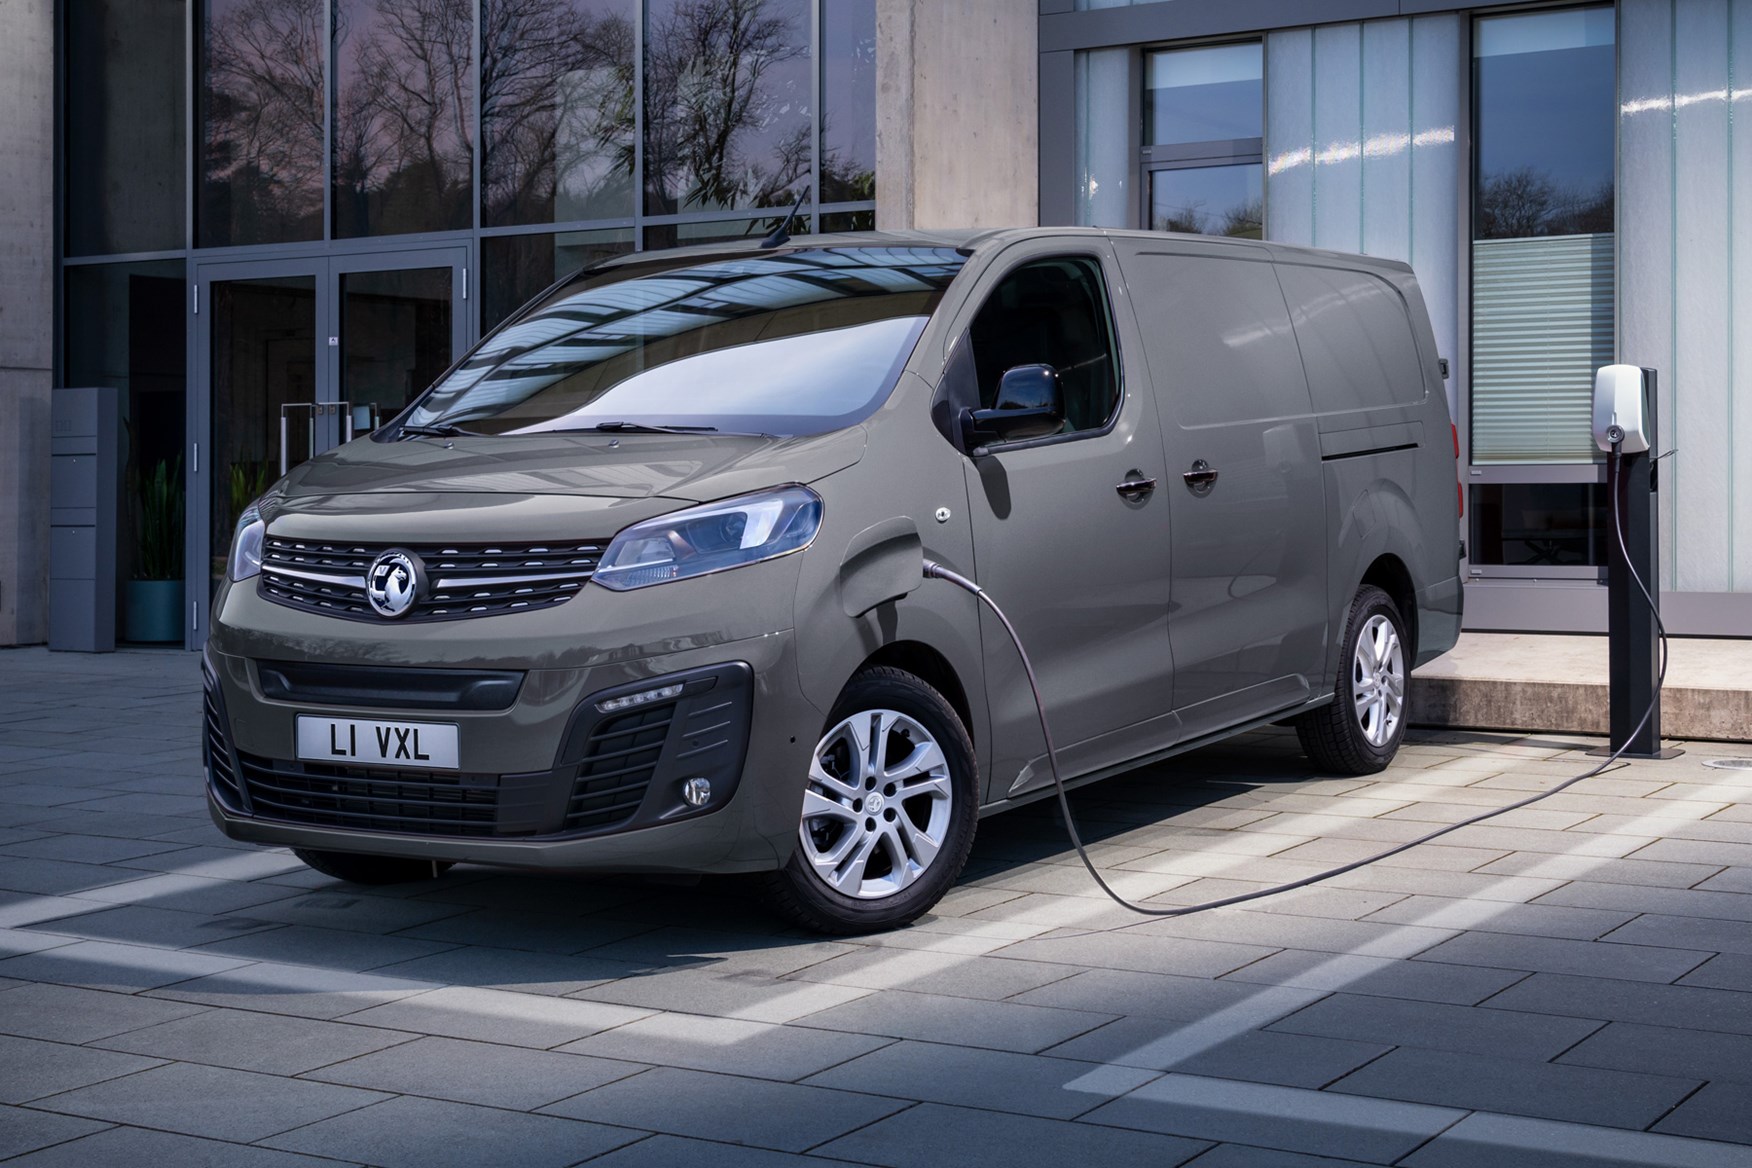 hybrid vans for sale uk